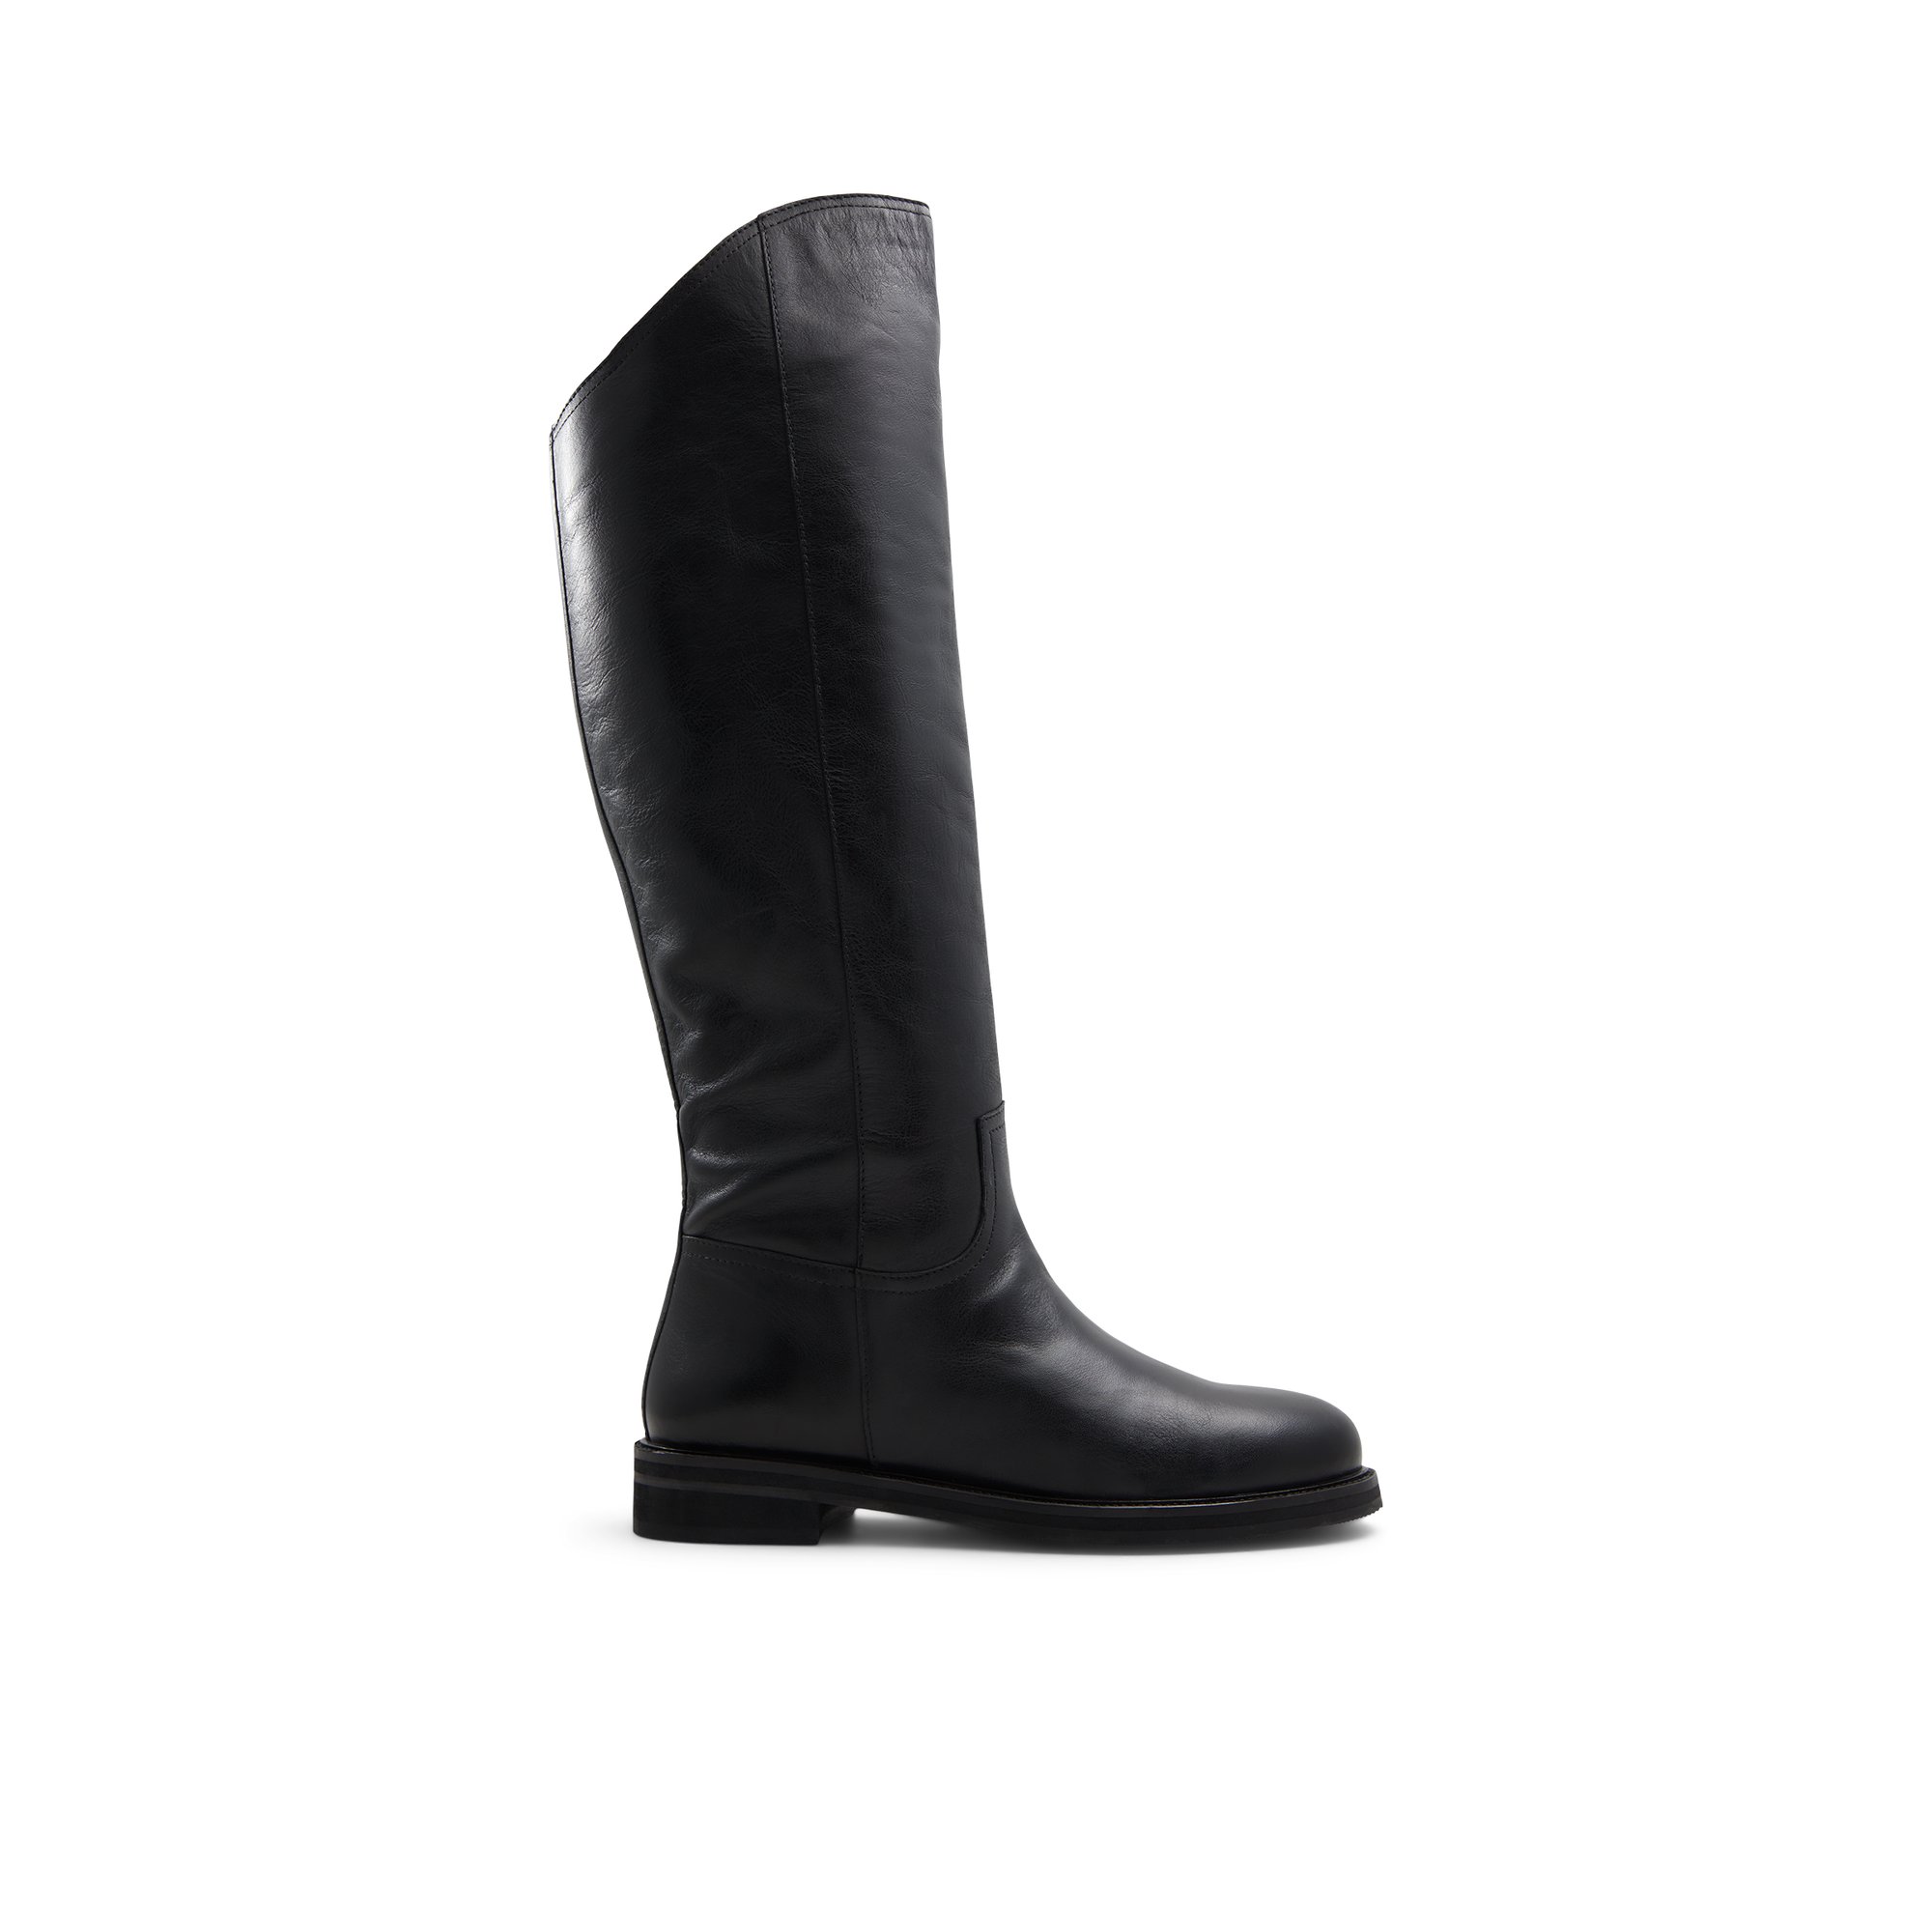 ALDO Landonna - Women's Boots Tall - Black